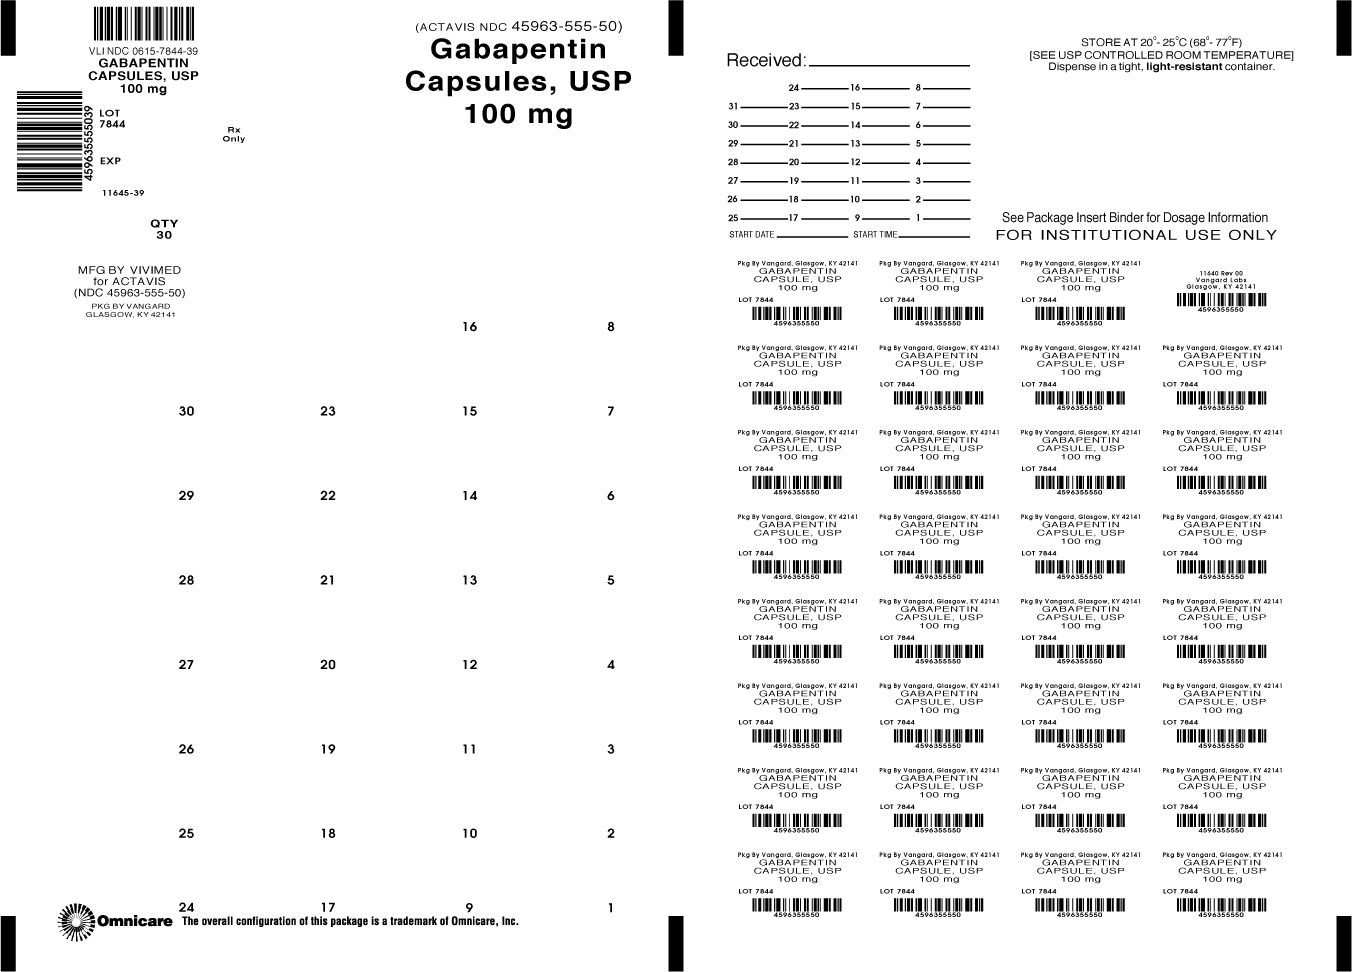 Principal Display Panel-Gabapentin Caps, USP 100mg